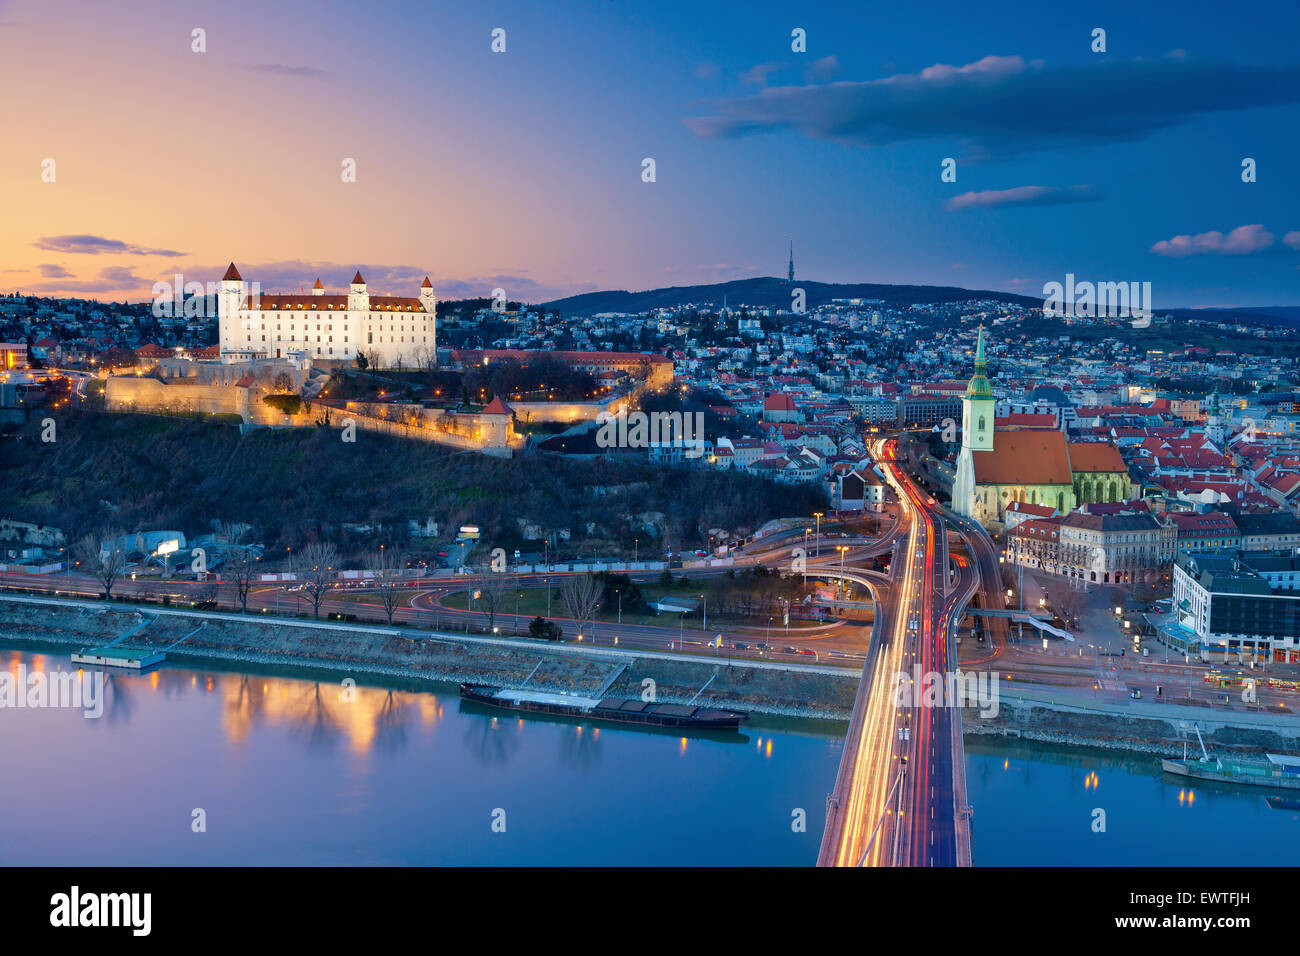 Bratislava, Slovakia. Image of Bratislava, the capital city of Slovakia during sunset. Stock Photo